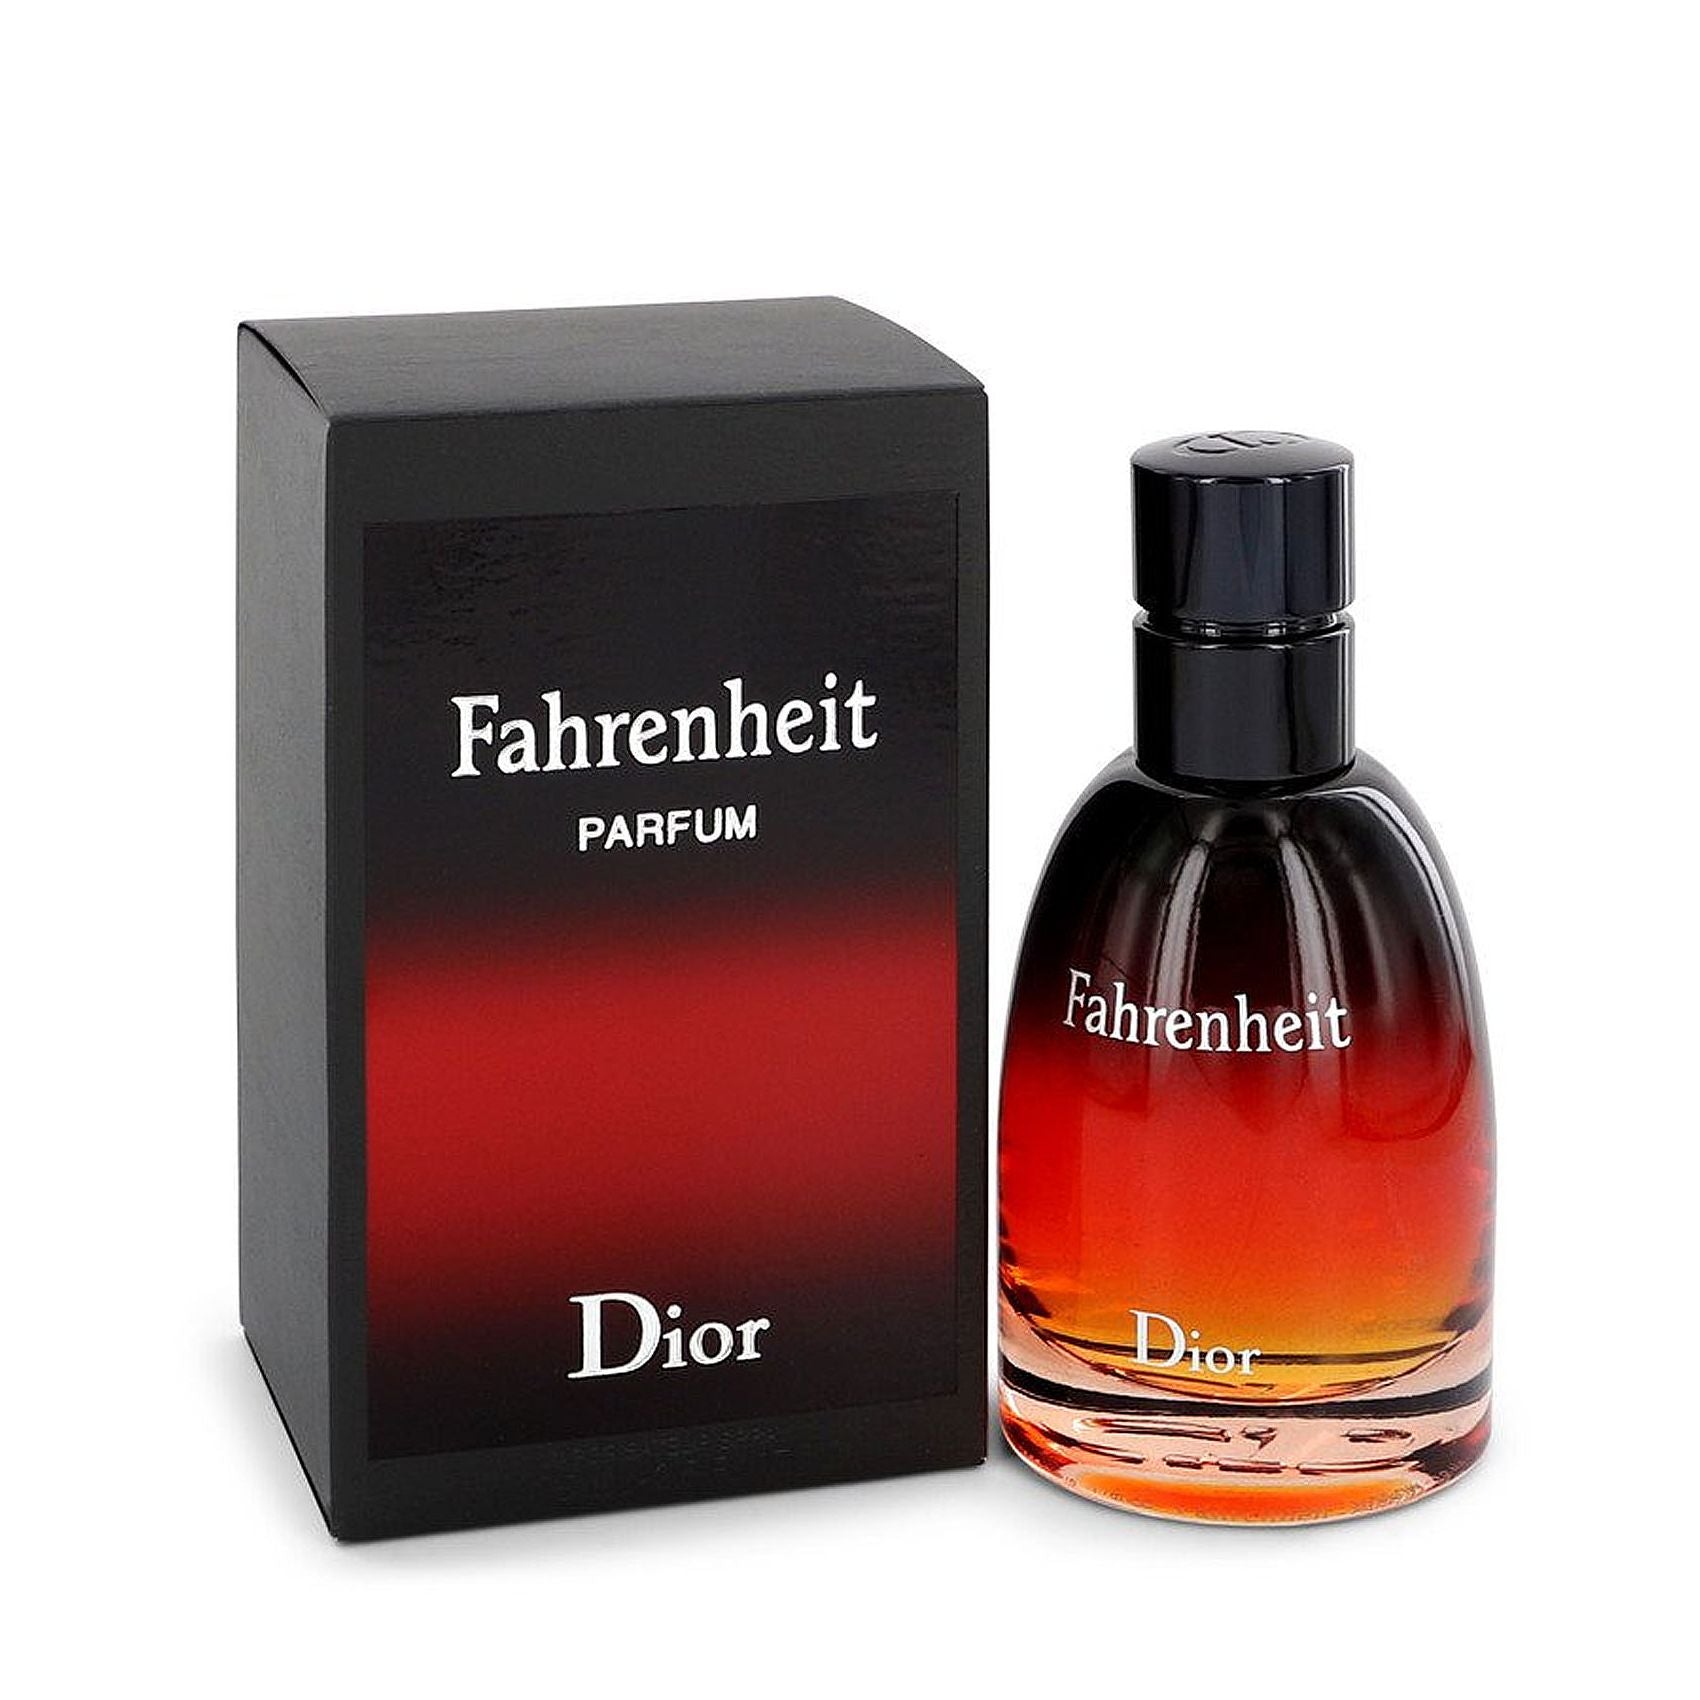 DIOR FAHRENHEIT Parfum - www.theperfumestoreinc.com #perfume